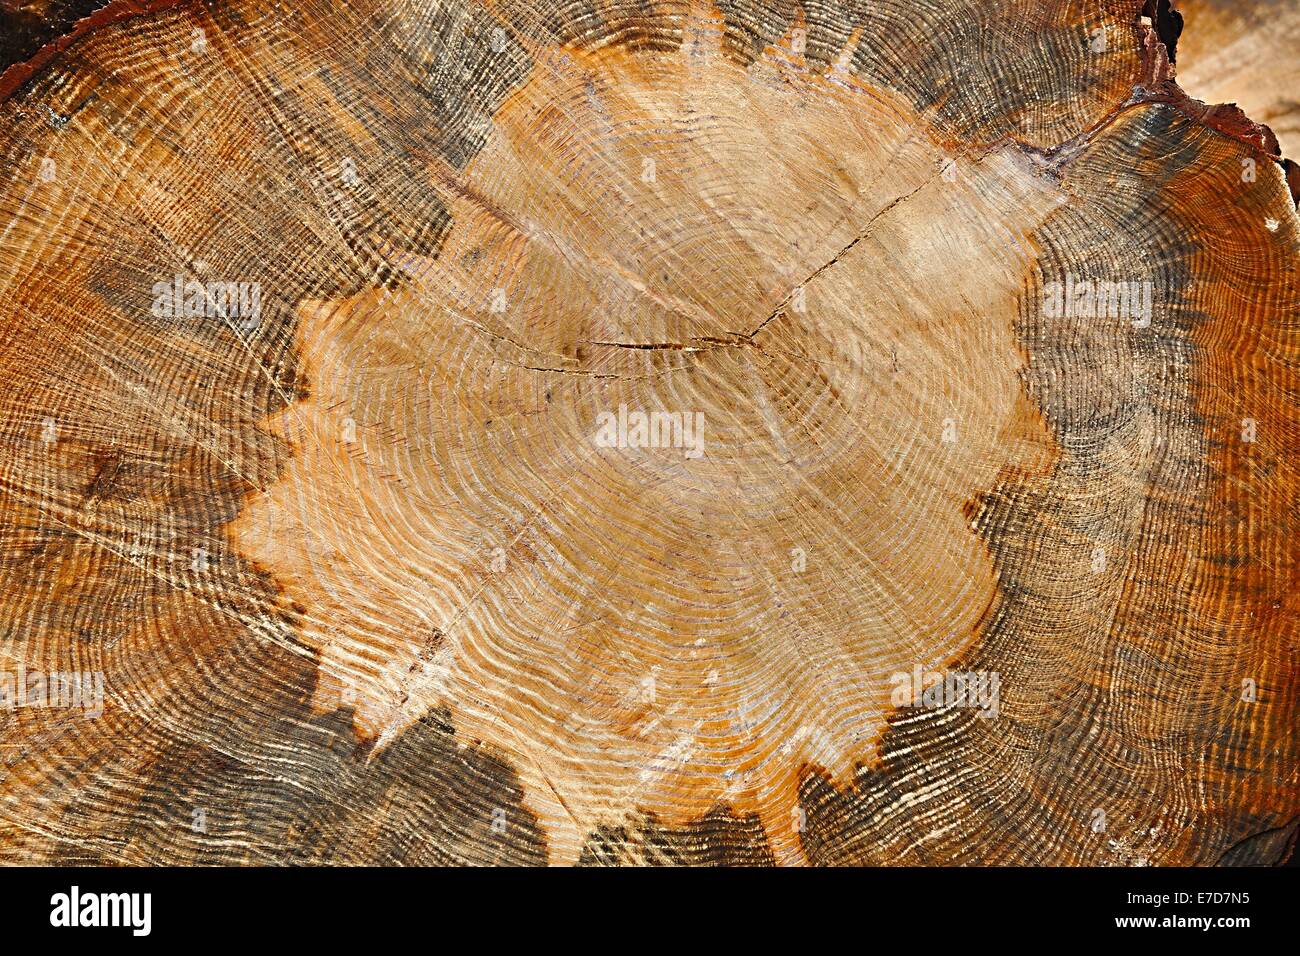 Tree trunk Stock Photo